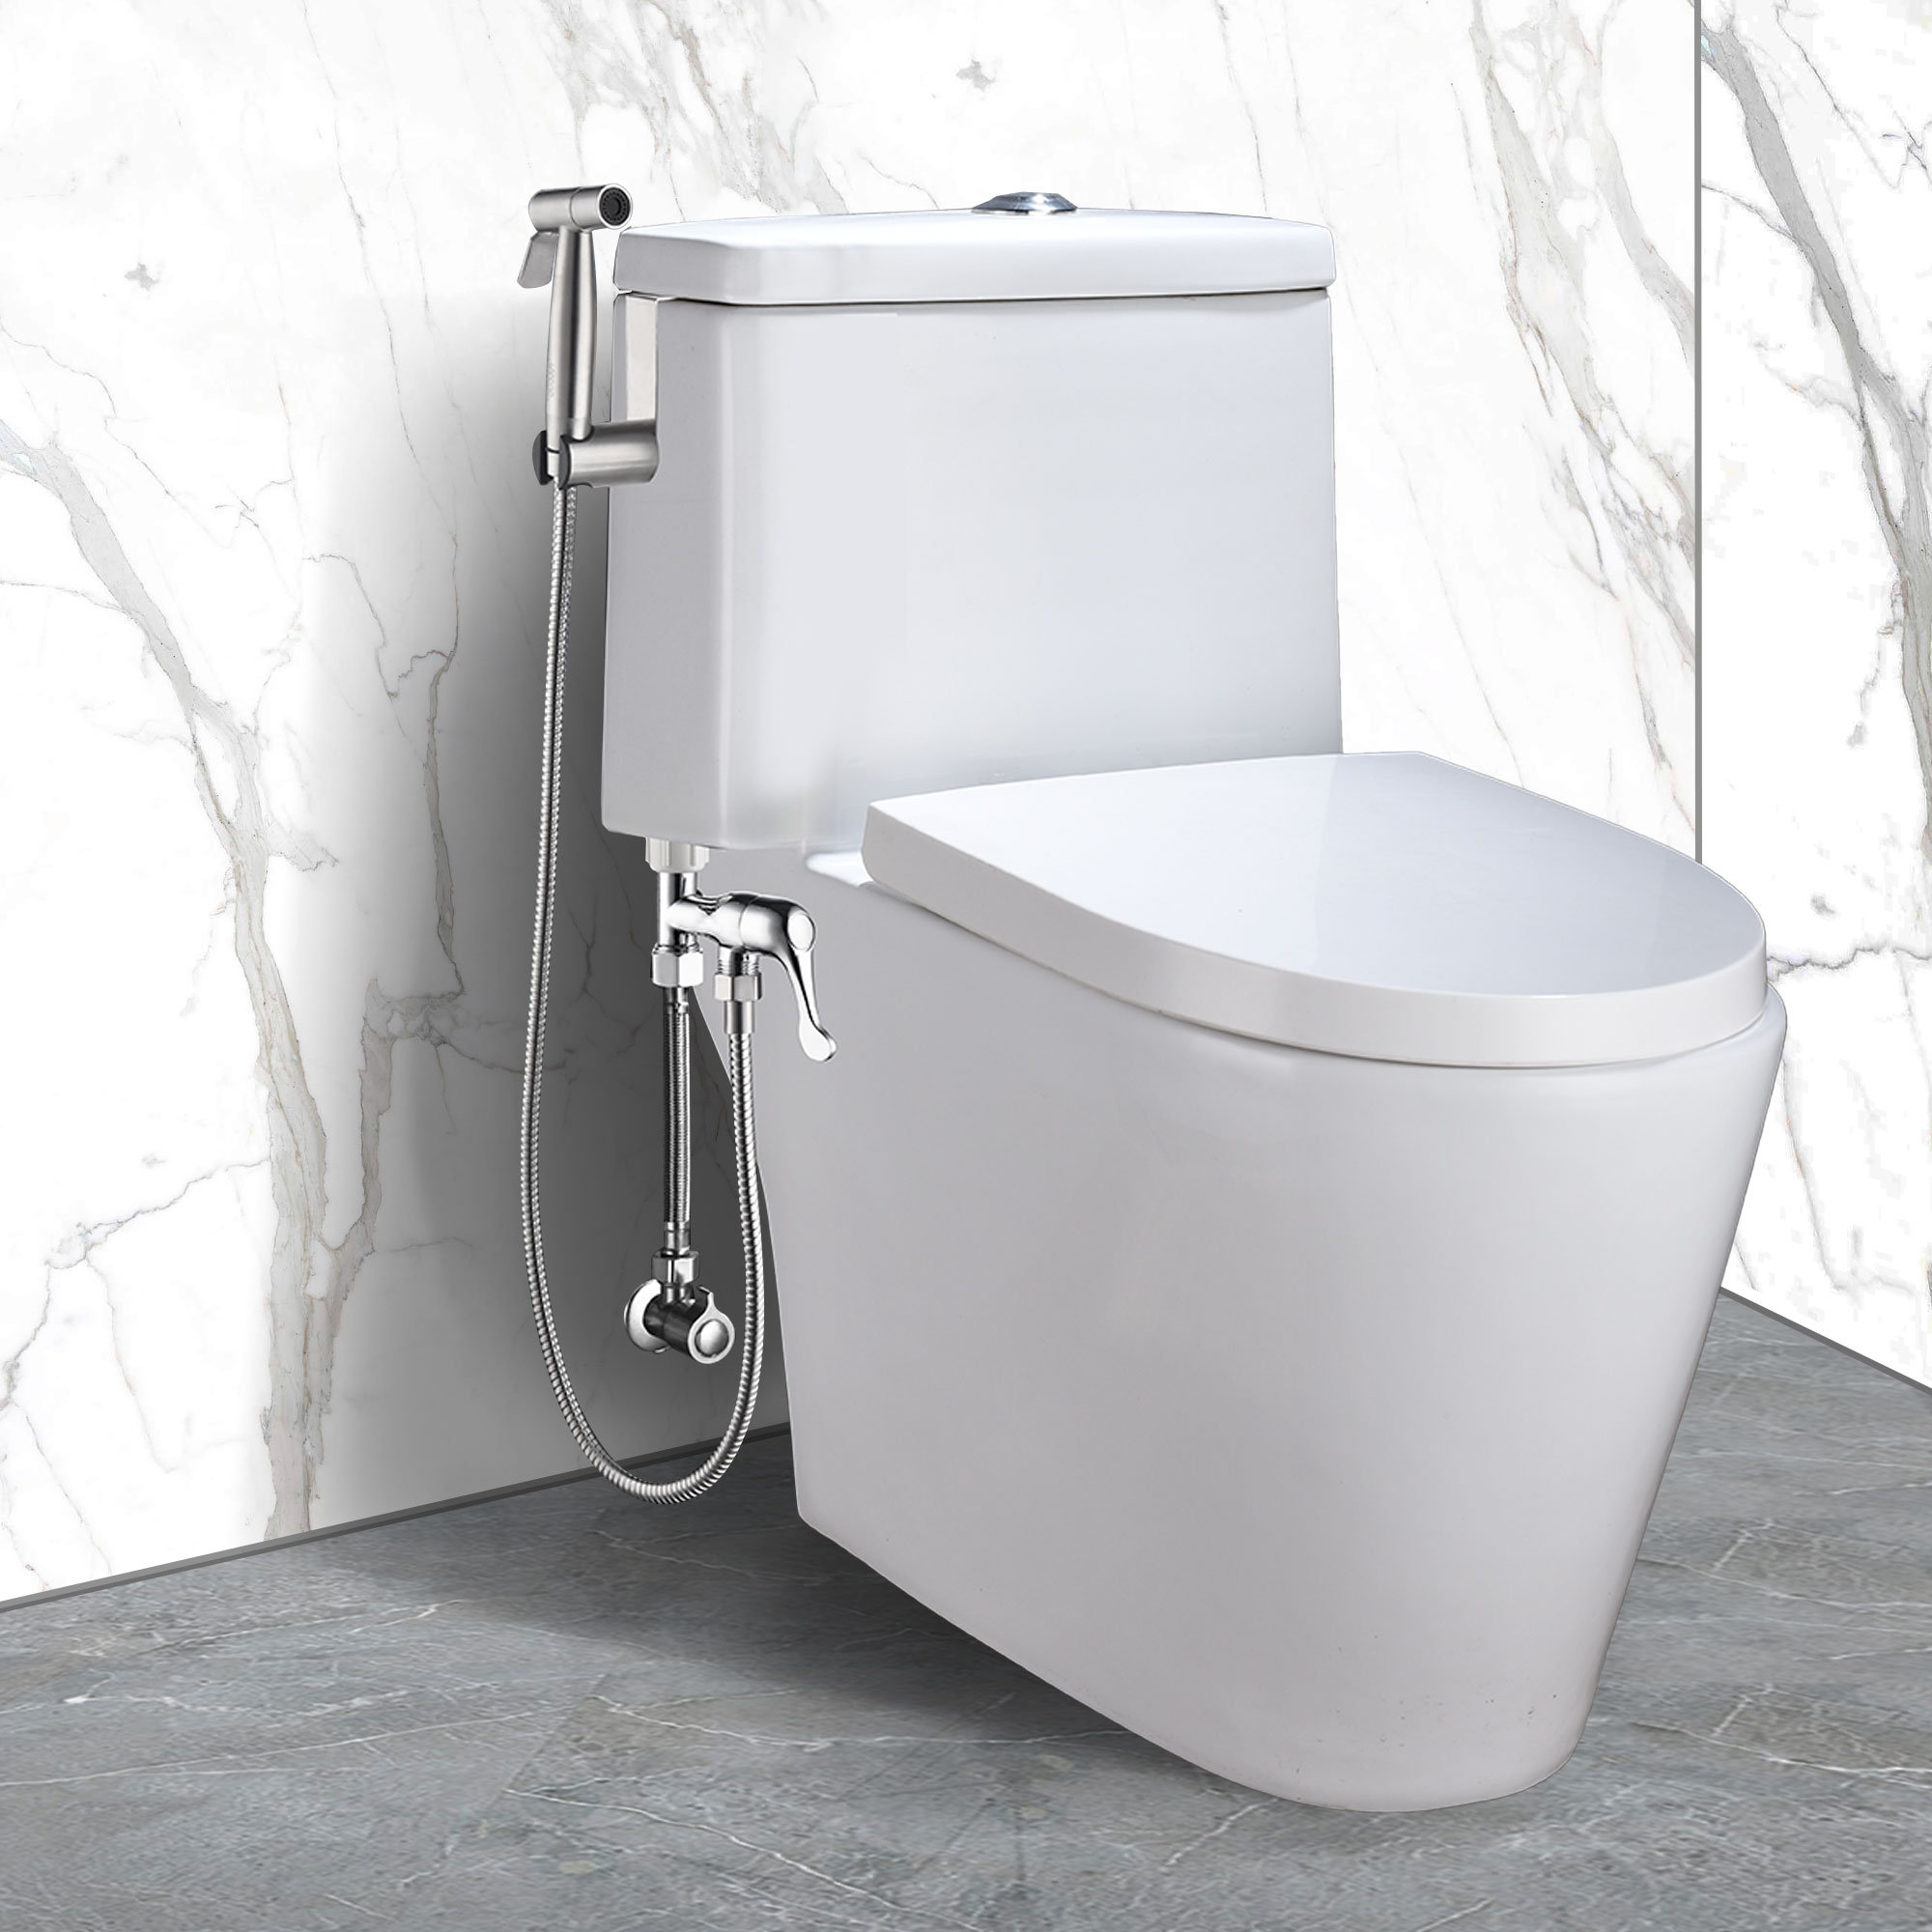 Design House Stainless Steel Toilet Mounted Handheld Bidet Sprayer